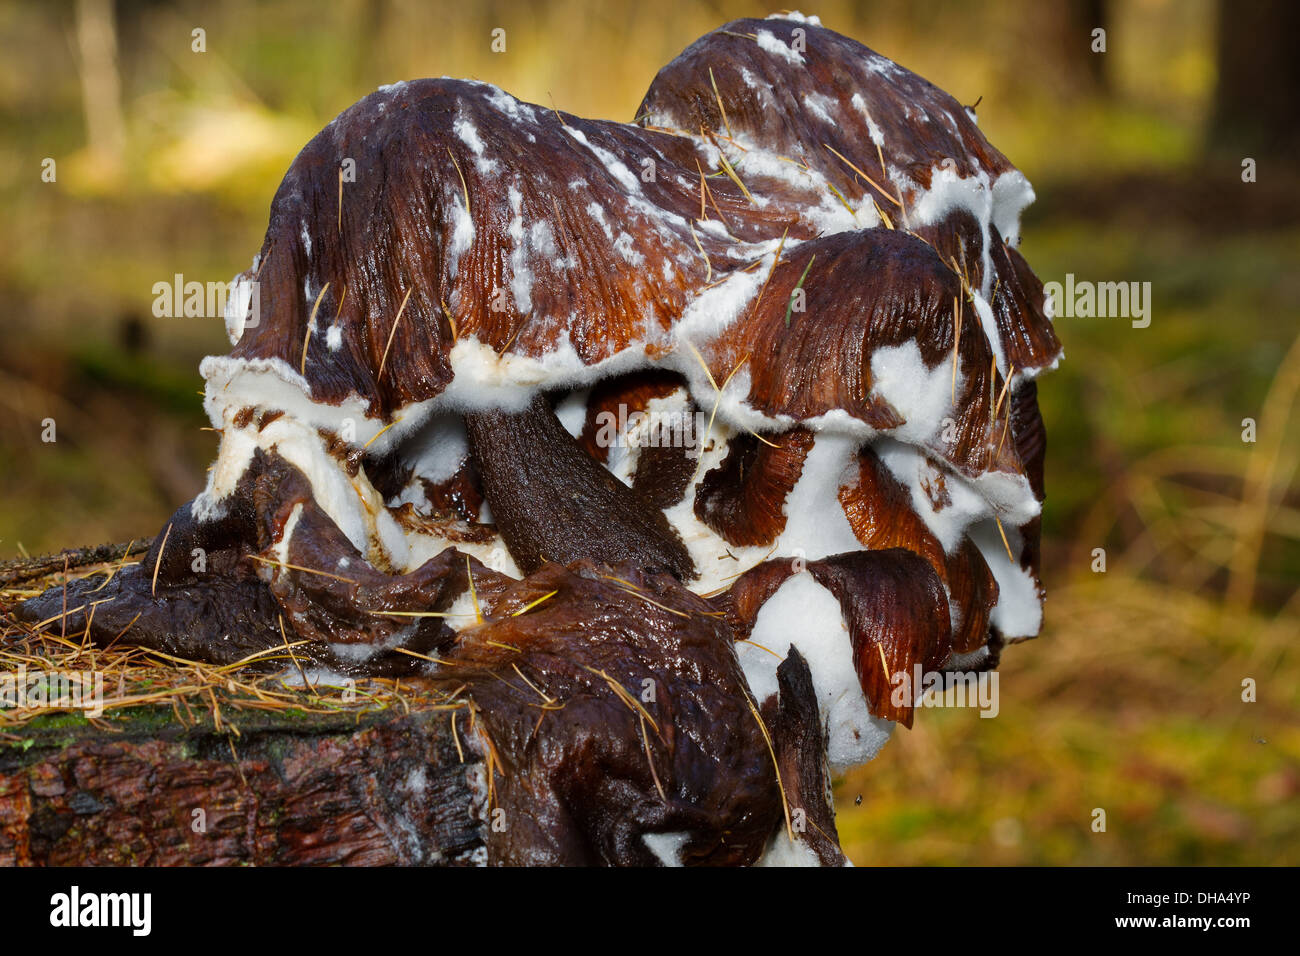 Moldy, slimy mushrooms on a tree trunk Stock Photo